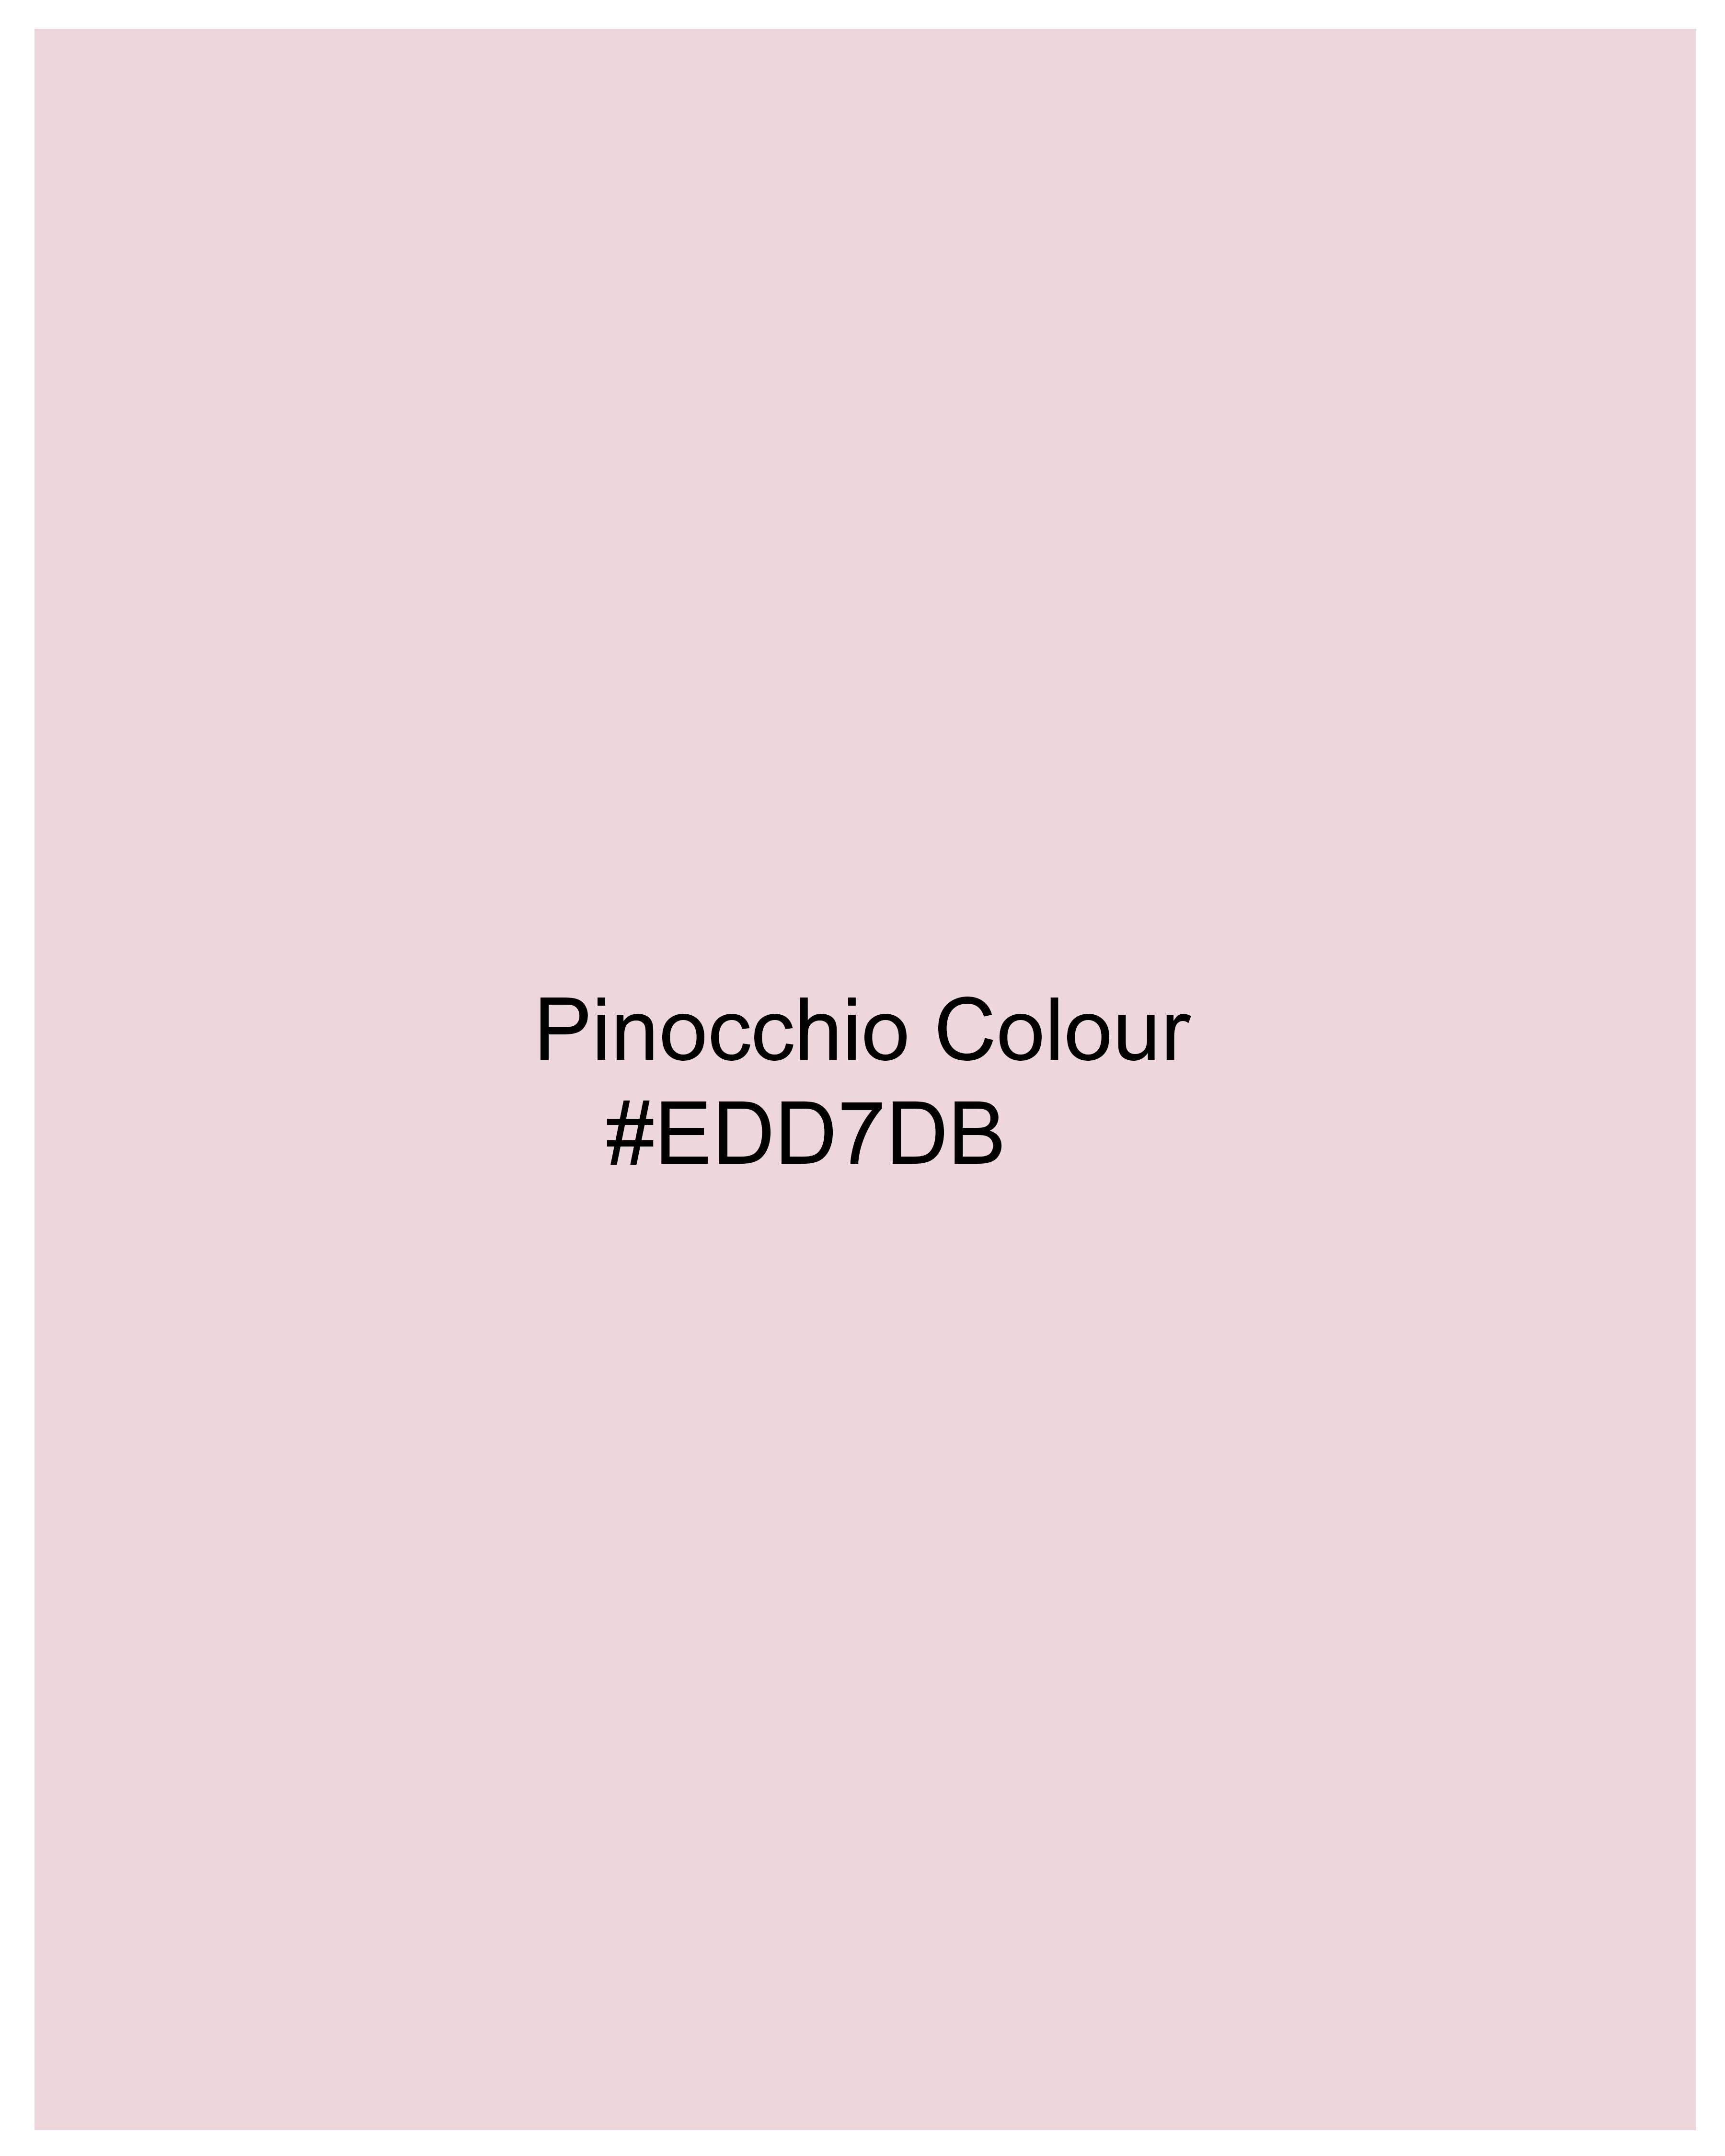 Pinocchio Pink Snake Pleated Super Soft Premium Cotton Tuxedo Shirt 8876-BLK-TXD-38, 8876-BLK-TXD-H-38,  8876-BLK-TXD-39,  8876-BLK-TXD-H-39,  8876-BLK-TXD-40,  8876-BLK-TXD-H-40,  8876-BLK-TXD-42,  8876-BLK-TXD-H-42,  8876-BLK-TXD-44,  8876-BLK-TXD-H-44,  8876-BLK-TXD-46,  8876-BLK-TXD-H-46,  8876-BLK-TXD-48,  8876-BLK-TXD-H-48,  8876-BLK-TXD-50,  8876-BLK-TXD-H-50,  8876-BLK-TXD-52,  8876-BLK-TXD-H-52